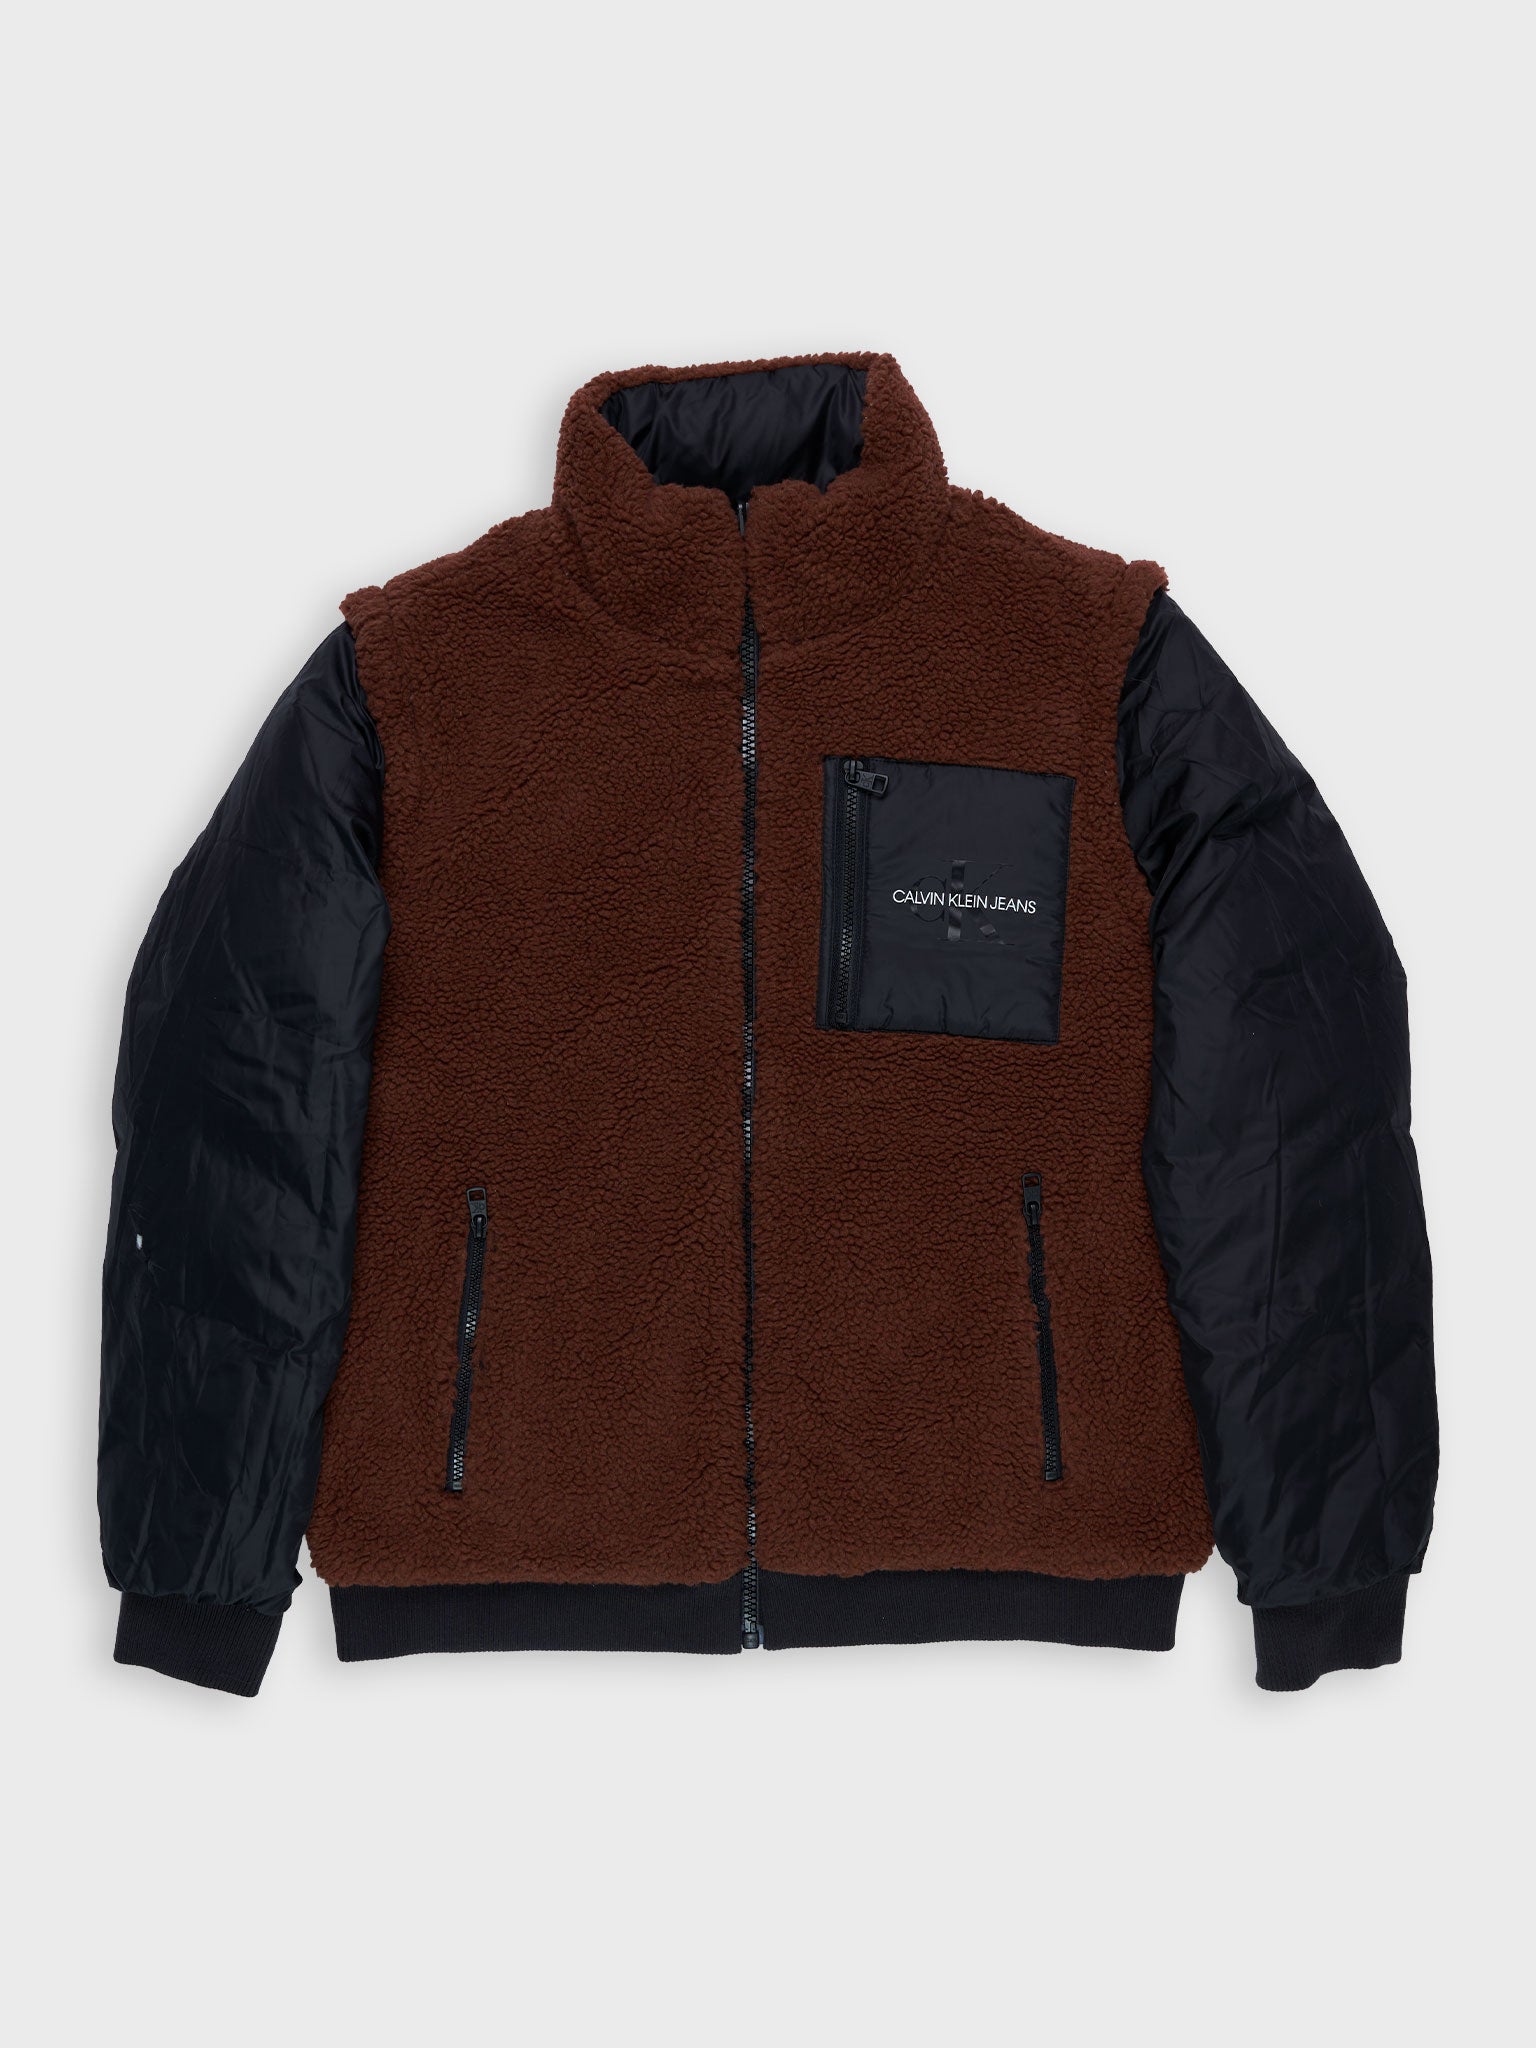 Reversible Jacket/Vest Black/Brown